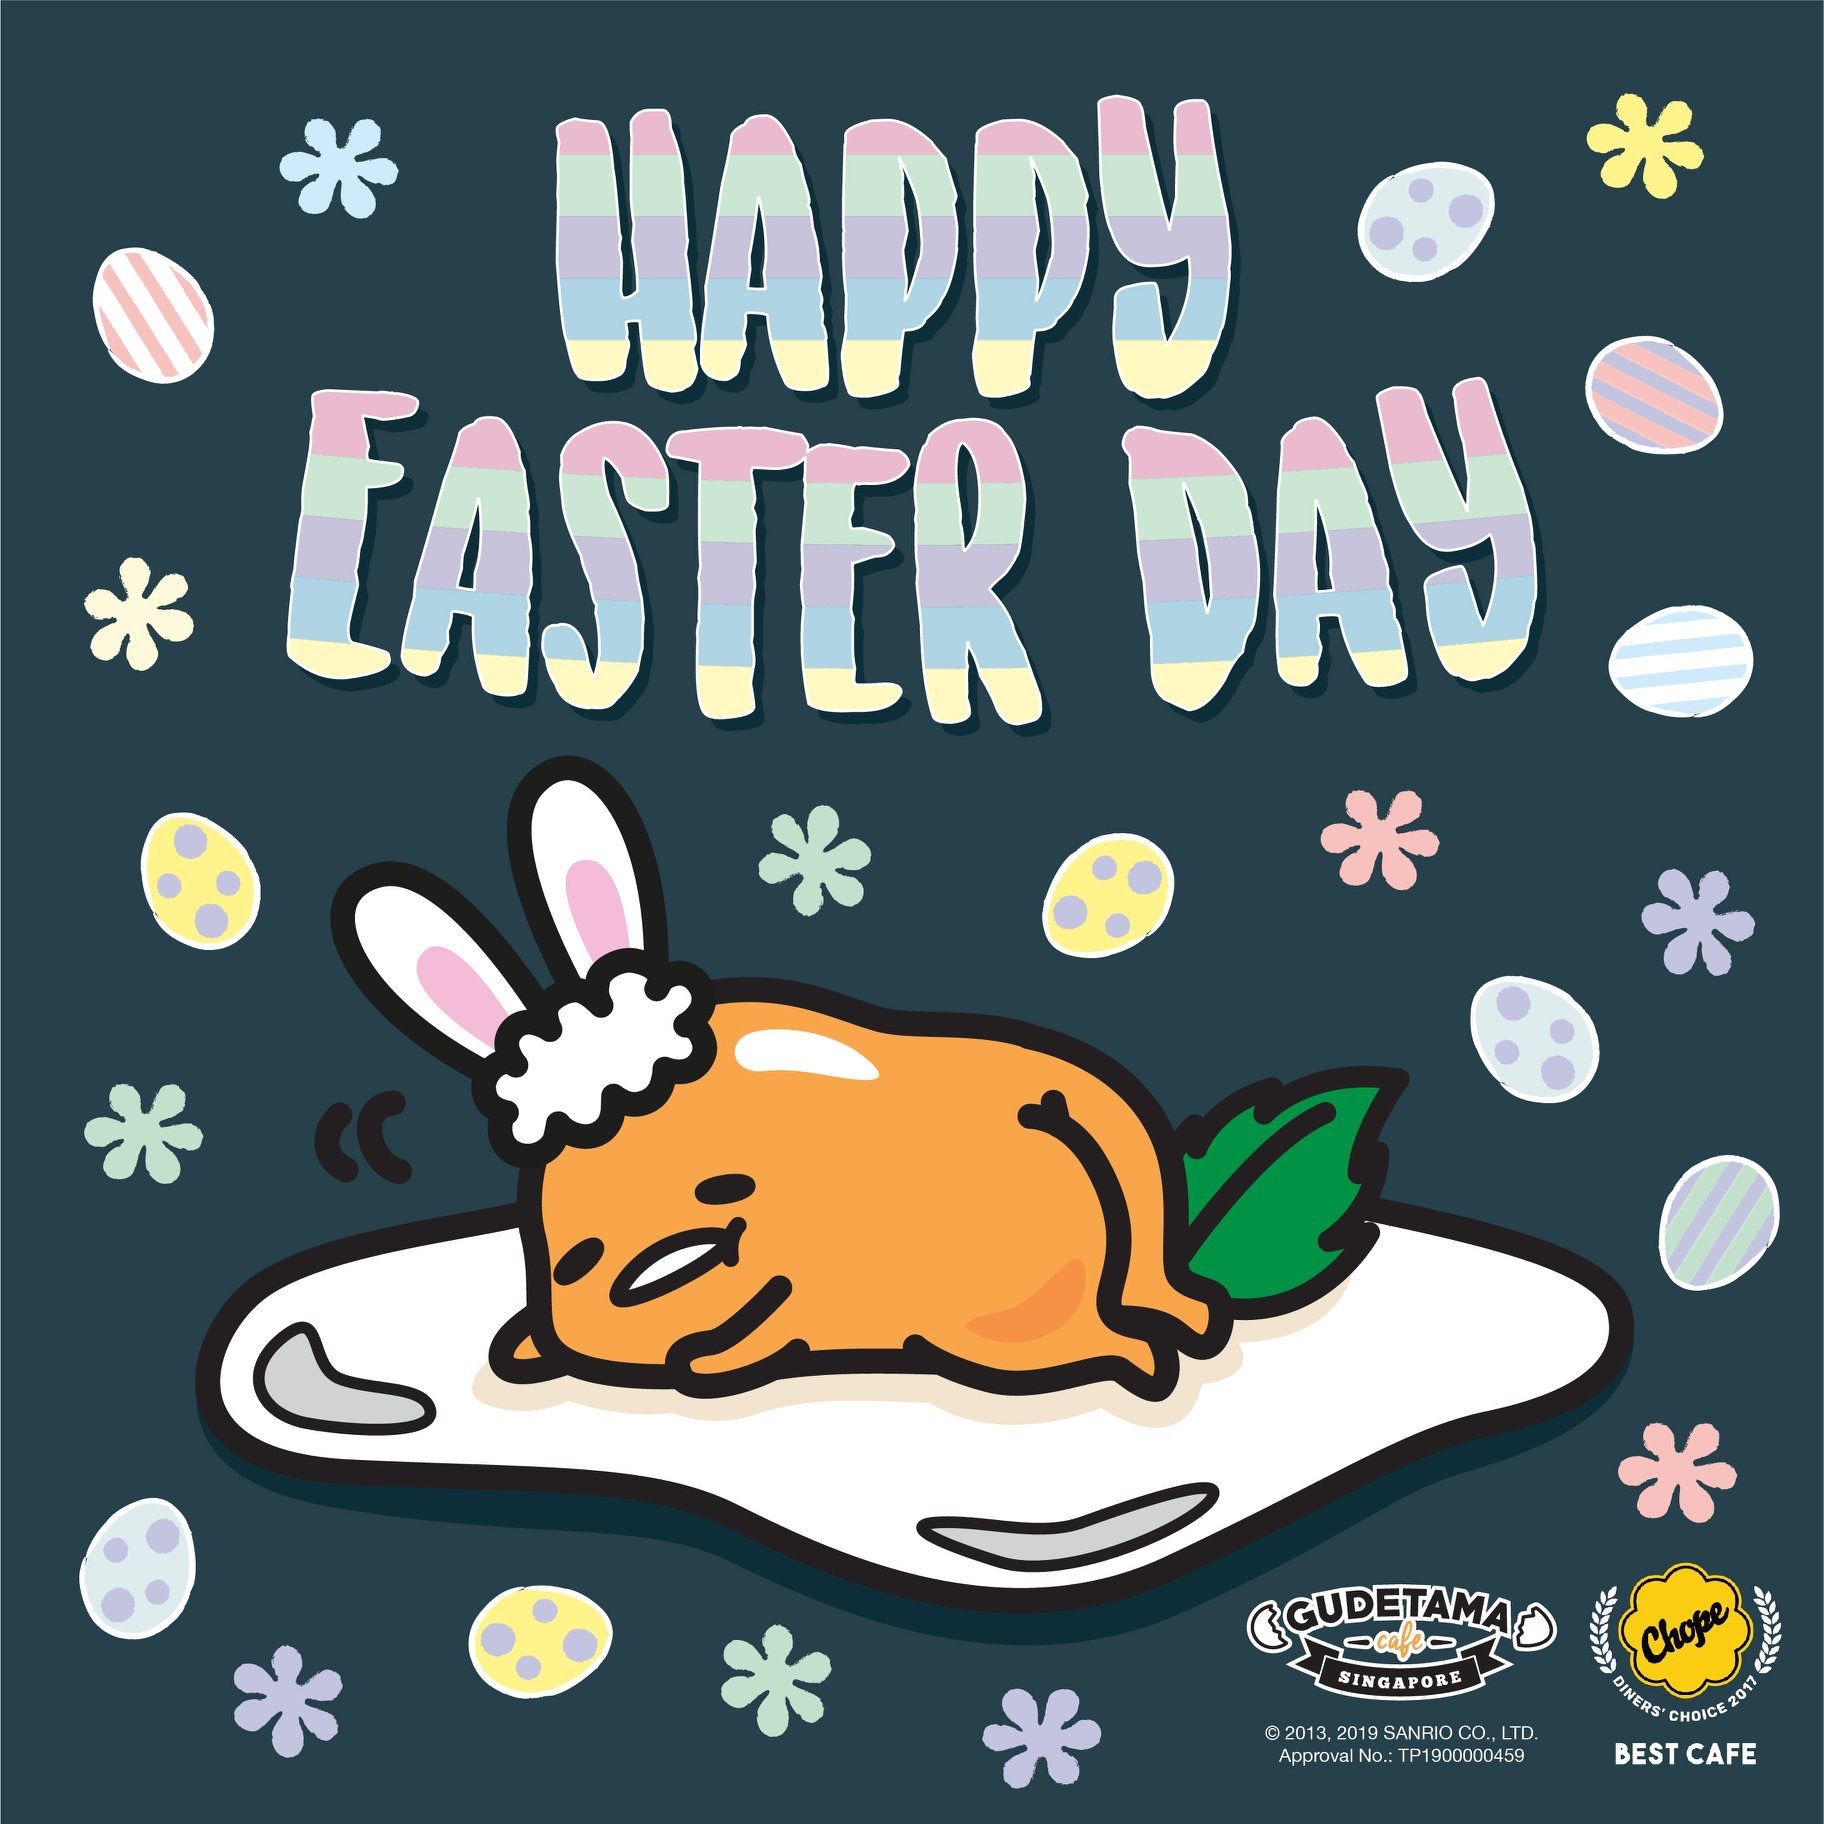 Happy Easter Day!. Gudetama, Happy easter day, Sanrio